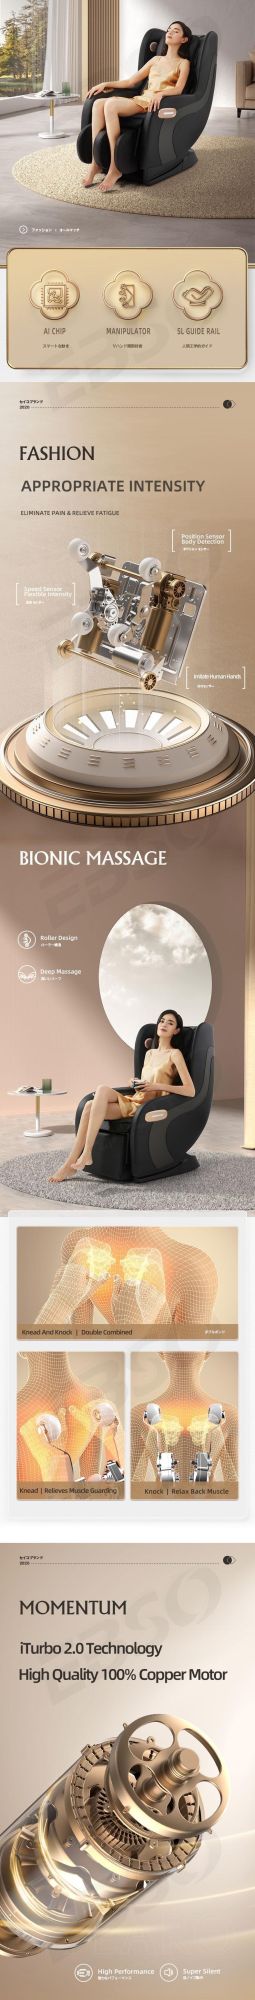 Body Massager Cheaper Massage Deluxe Shiatsu Foot Massage Chair with Heatpress